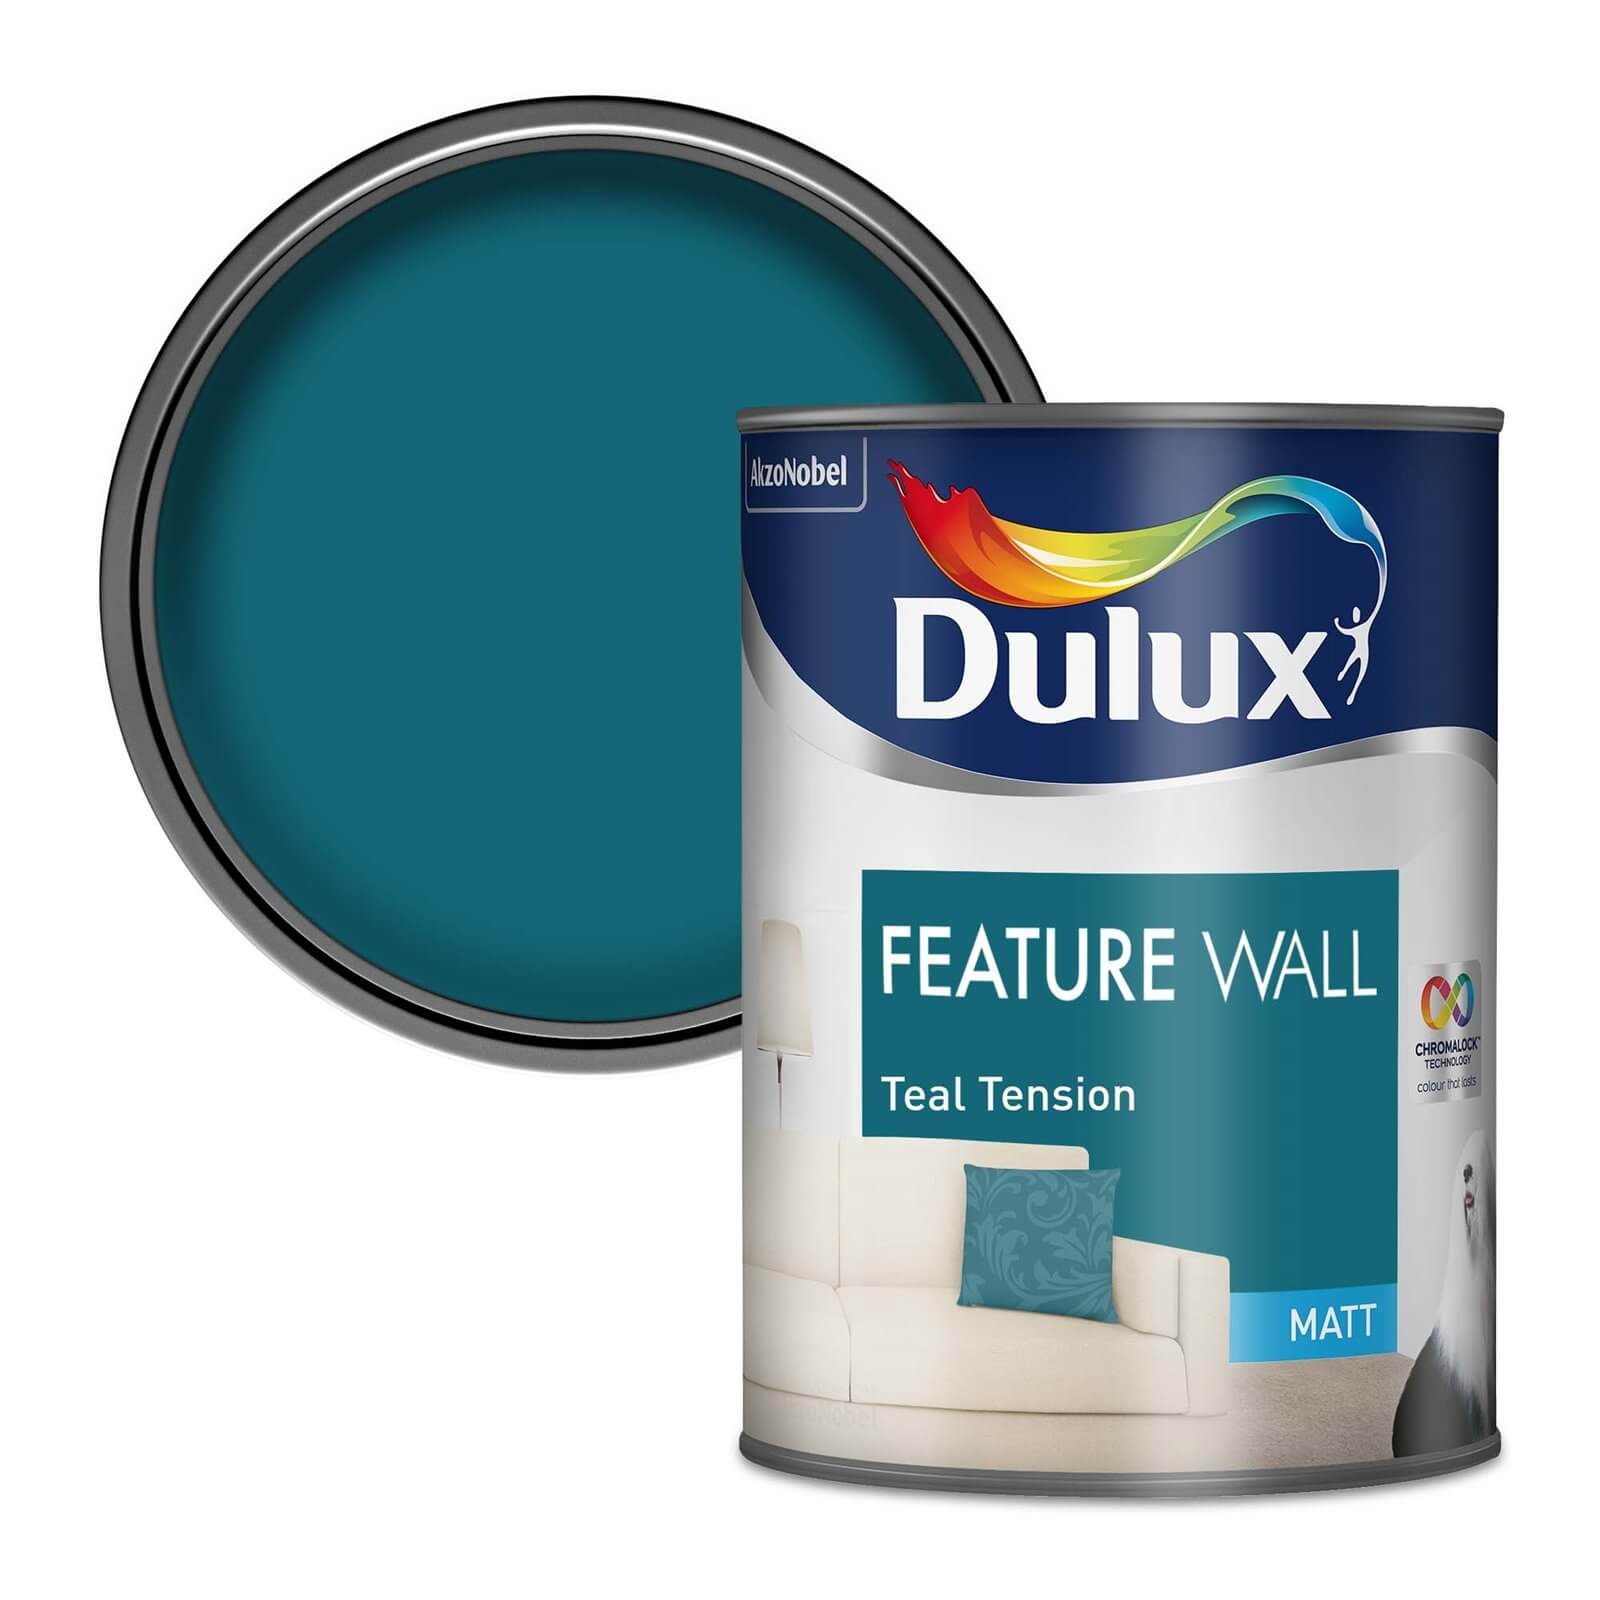 Dulux Feature Wall Teal Tension - Matt Emulsion Paint - 1.25L